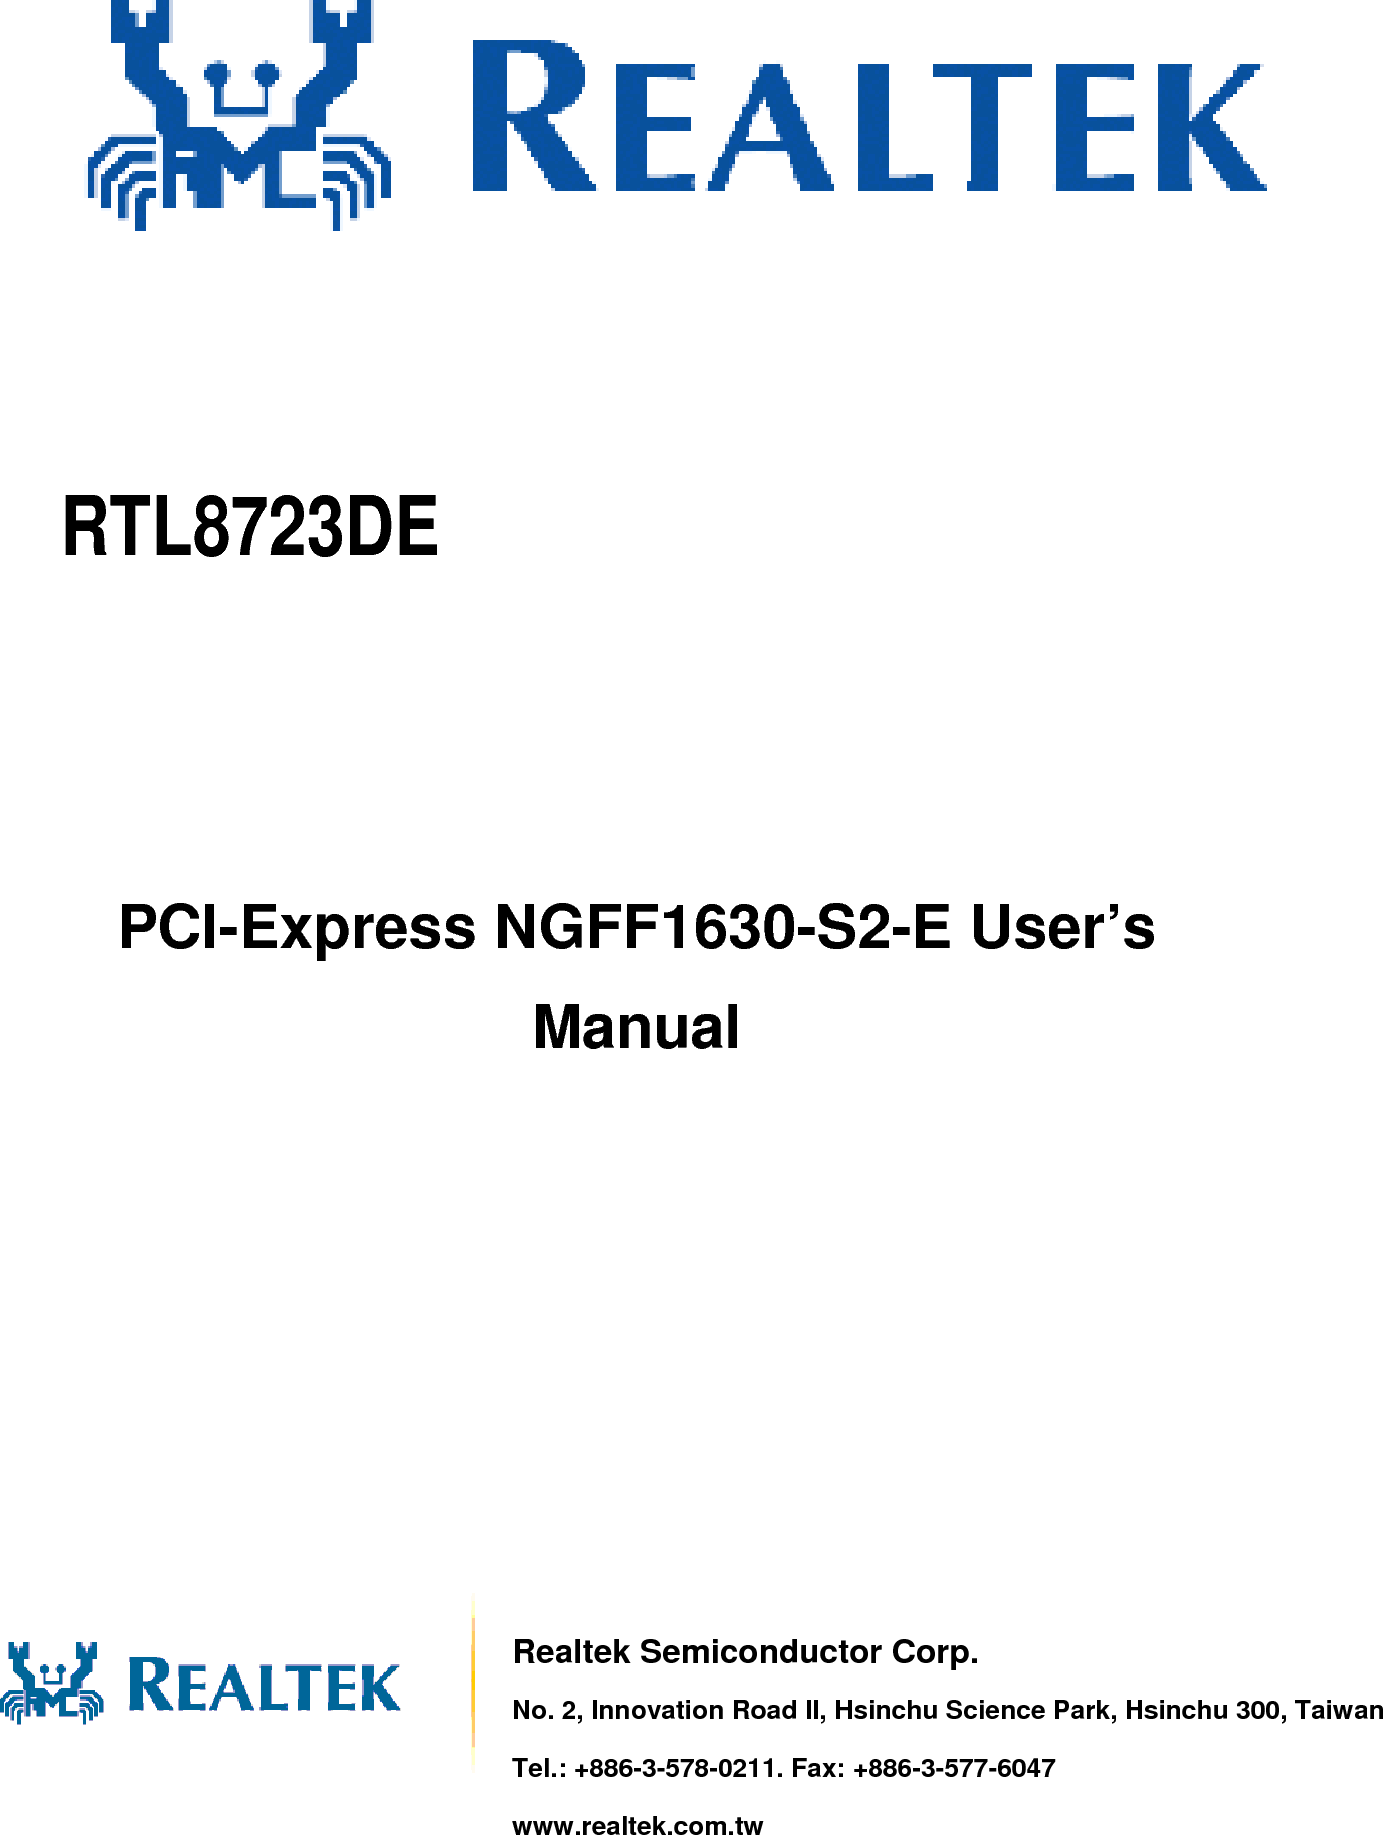                                                                     RTL8723DE                                                                                   User’s Manual        RTL8723DE      PCI-Express NGFF1630-S2-E User’s Manual        Realtek Semiconductor Corp. No. 2, Innovation Road II, Hsinchu Science Park, Hsinchu 300, Taiwan Tel.: +886-3-578-0211. Fax: +886-3-577-6047 www.realtek.com.tw 